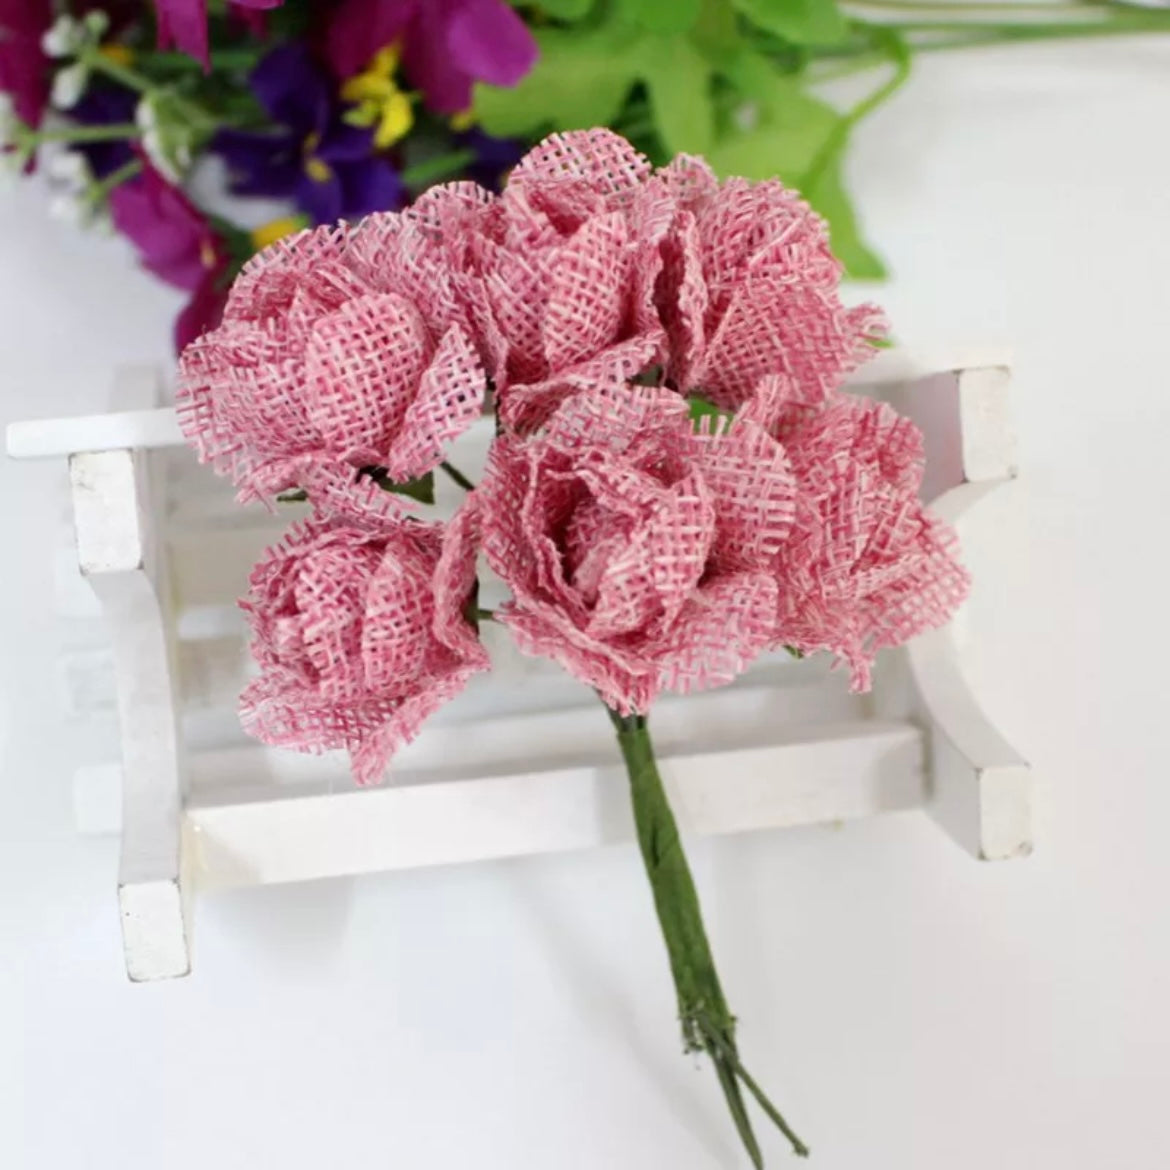 Burlap Jute Rose Flower Pick Style 7 - Pink